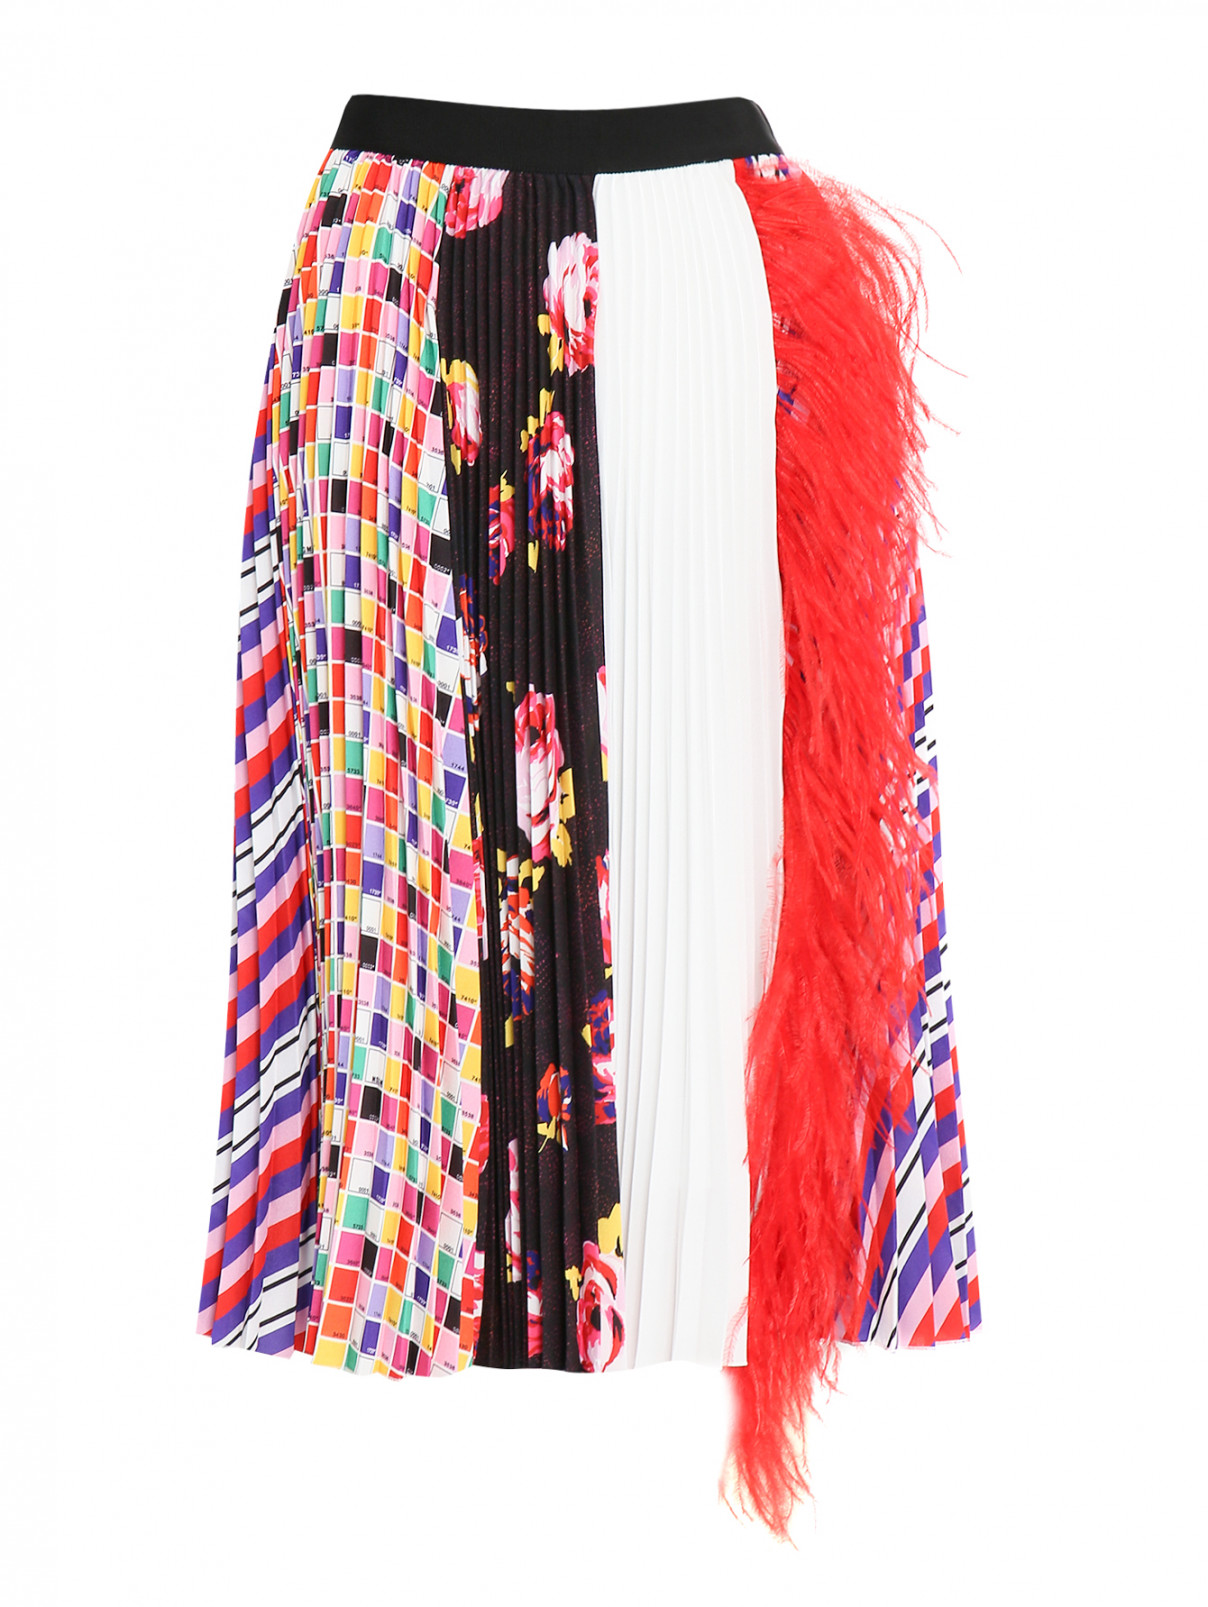 Юбка-миди с узором декорированная перьями MSGM  –  Общий вид  – Цвет:  Узор